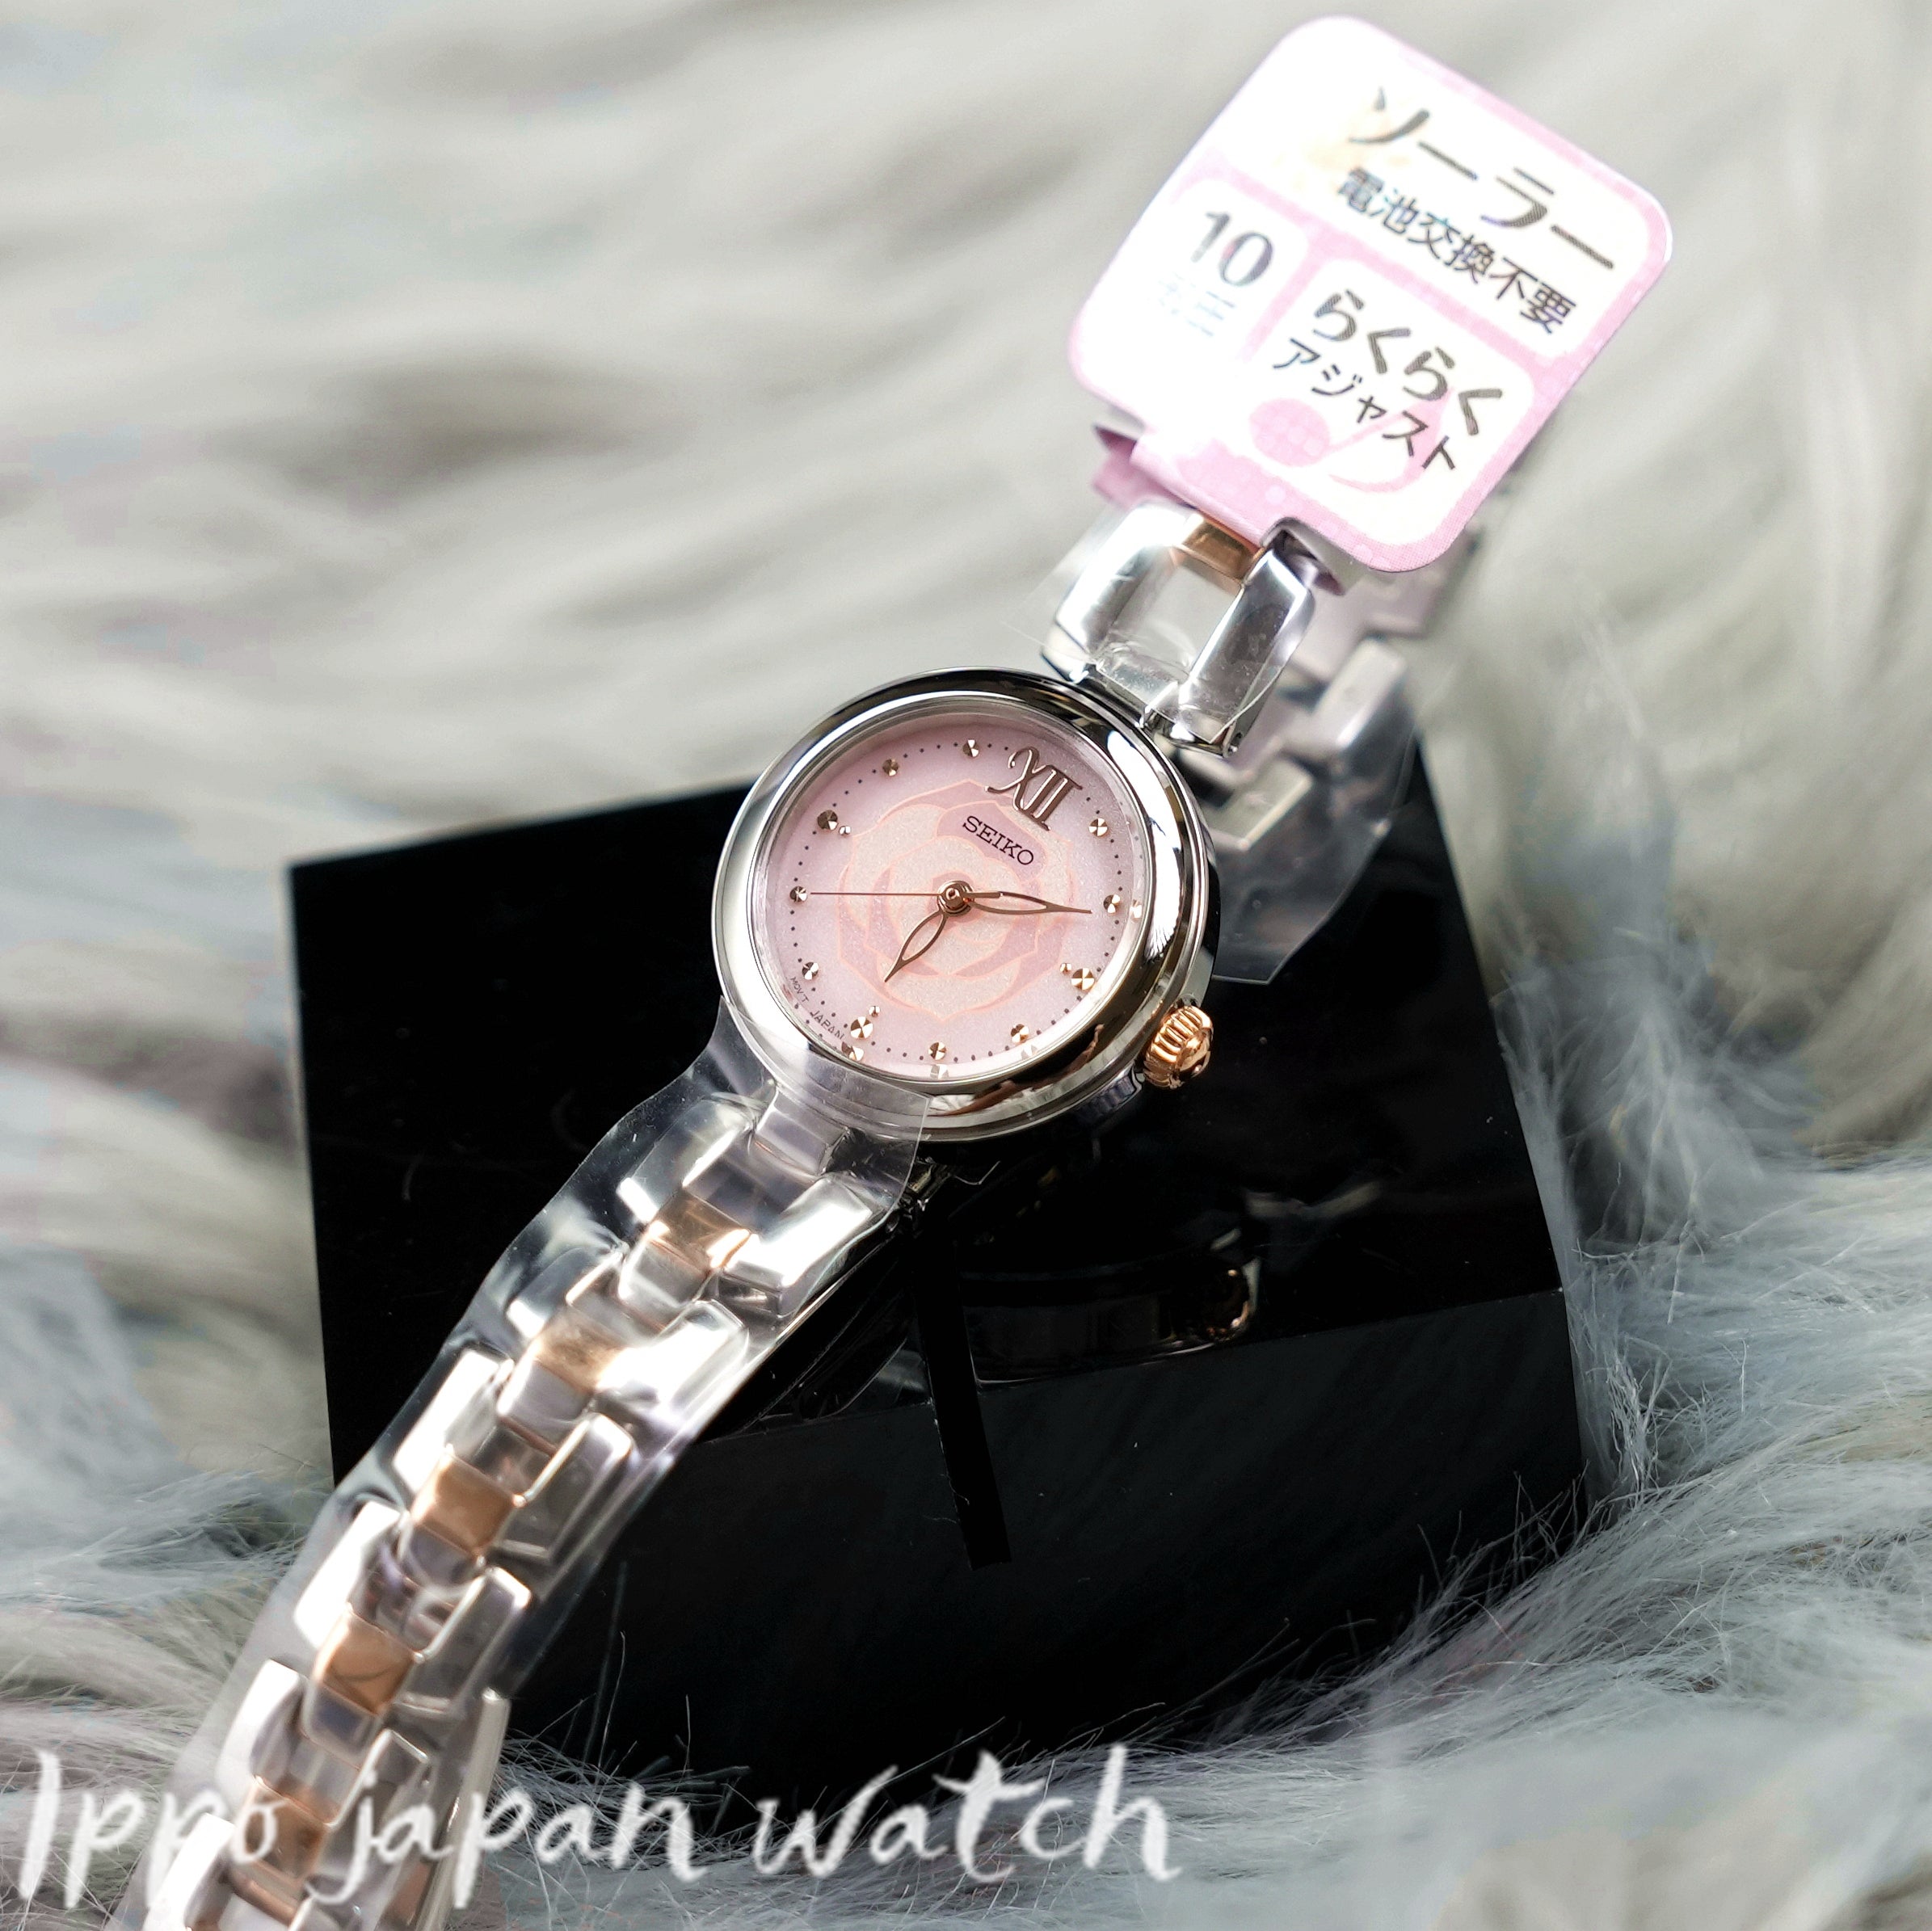 Seiko Selection SWFA193 solar 10 bar watch - IPPO JAPAN WATCH 